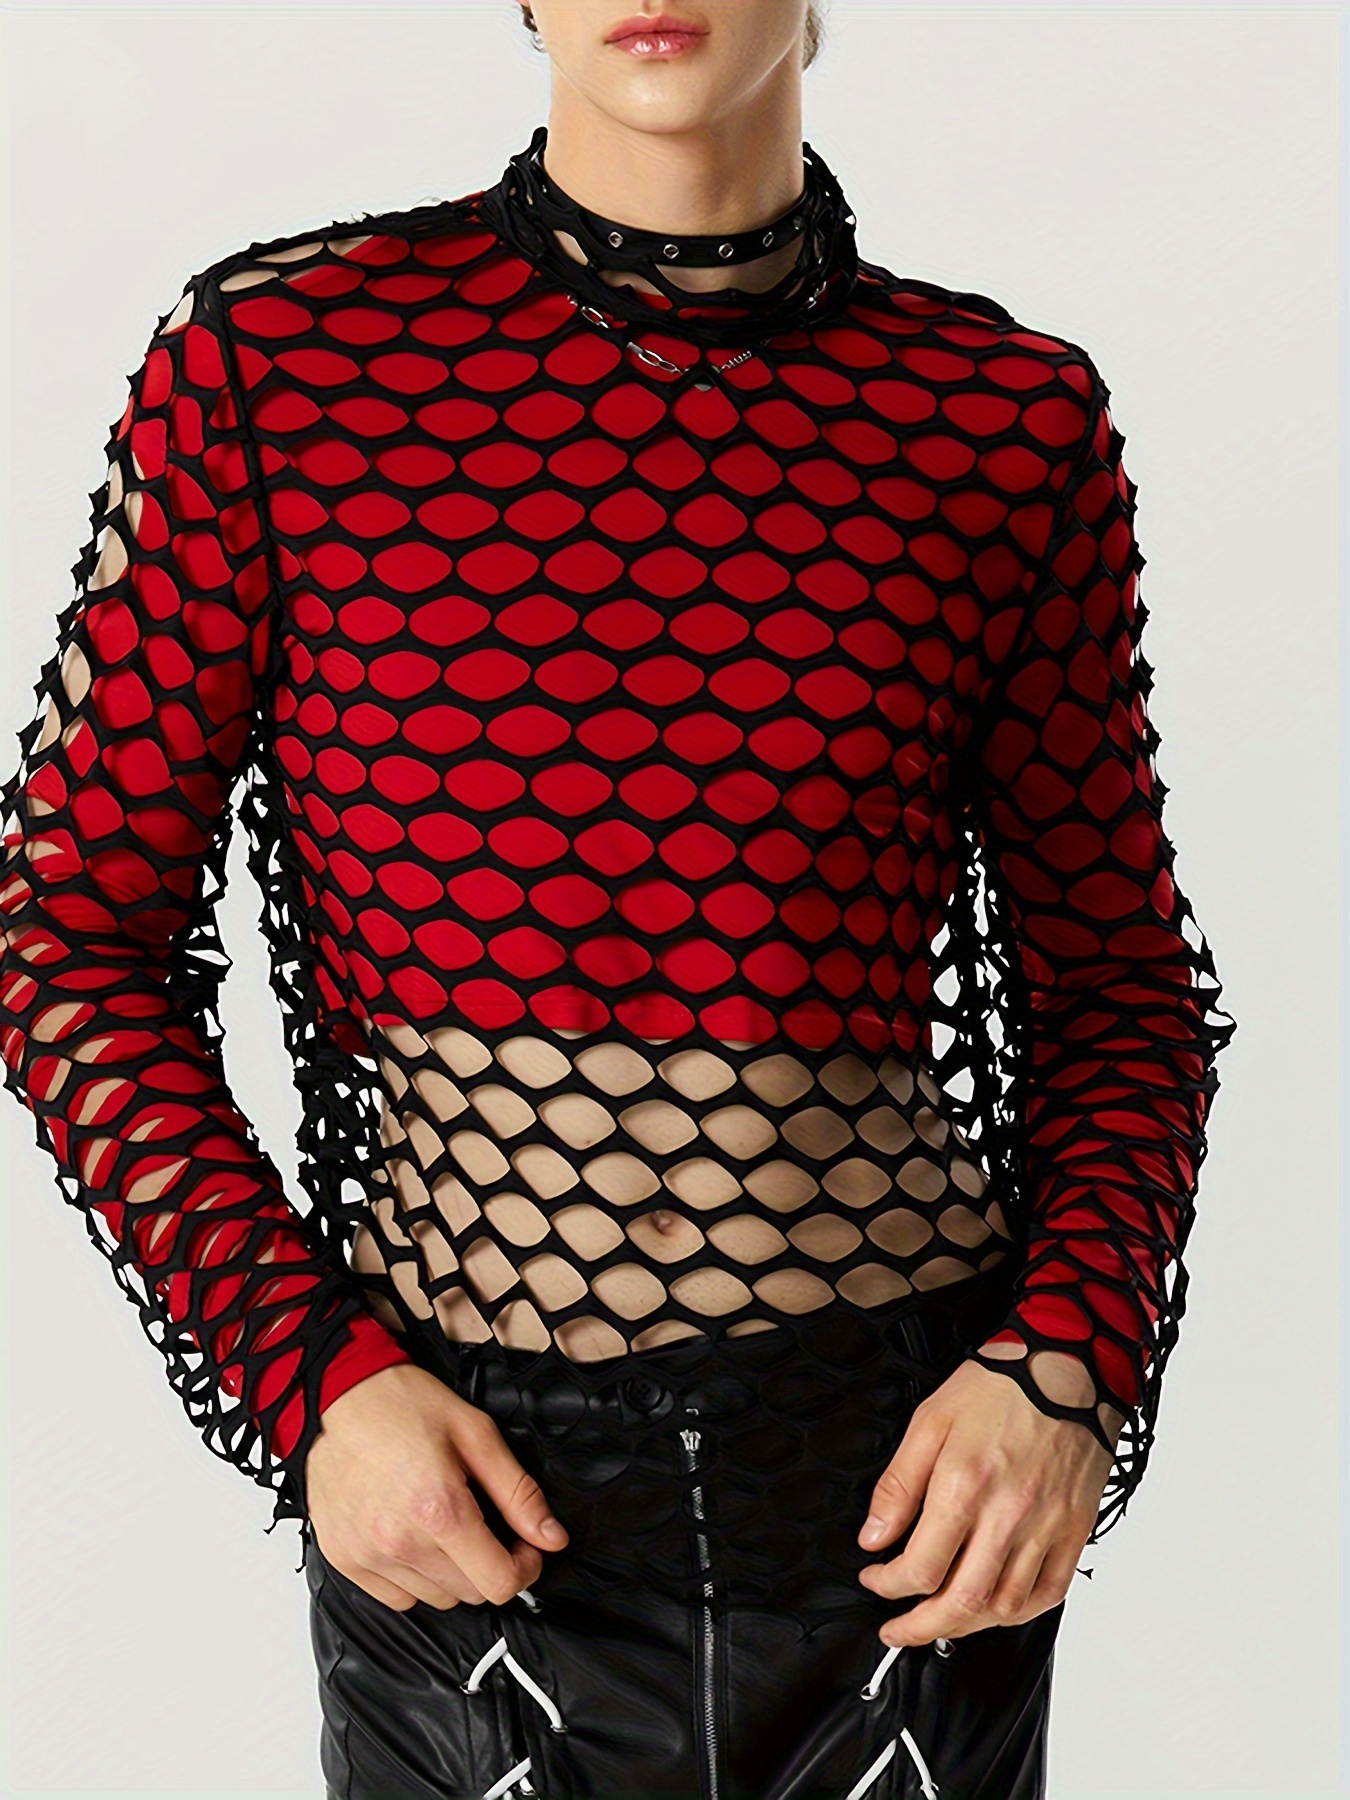 Women's Rhinestone Long Sleeve Bodysuit Studded Fishnet Sheer Shirt Teddy  Without Bra Black One Size